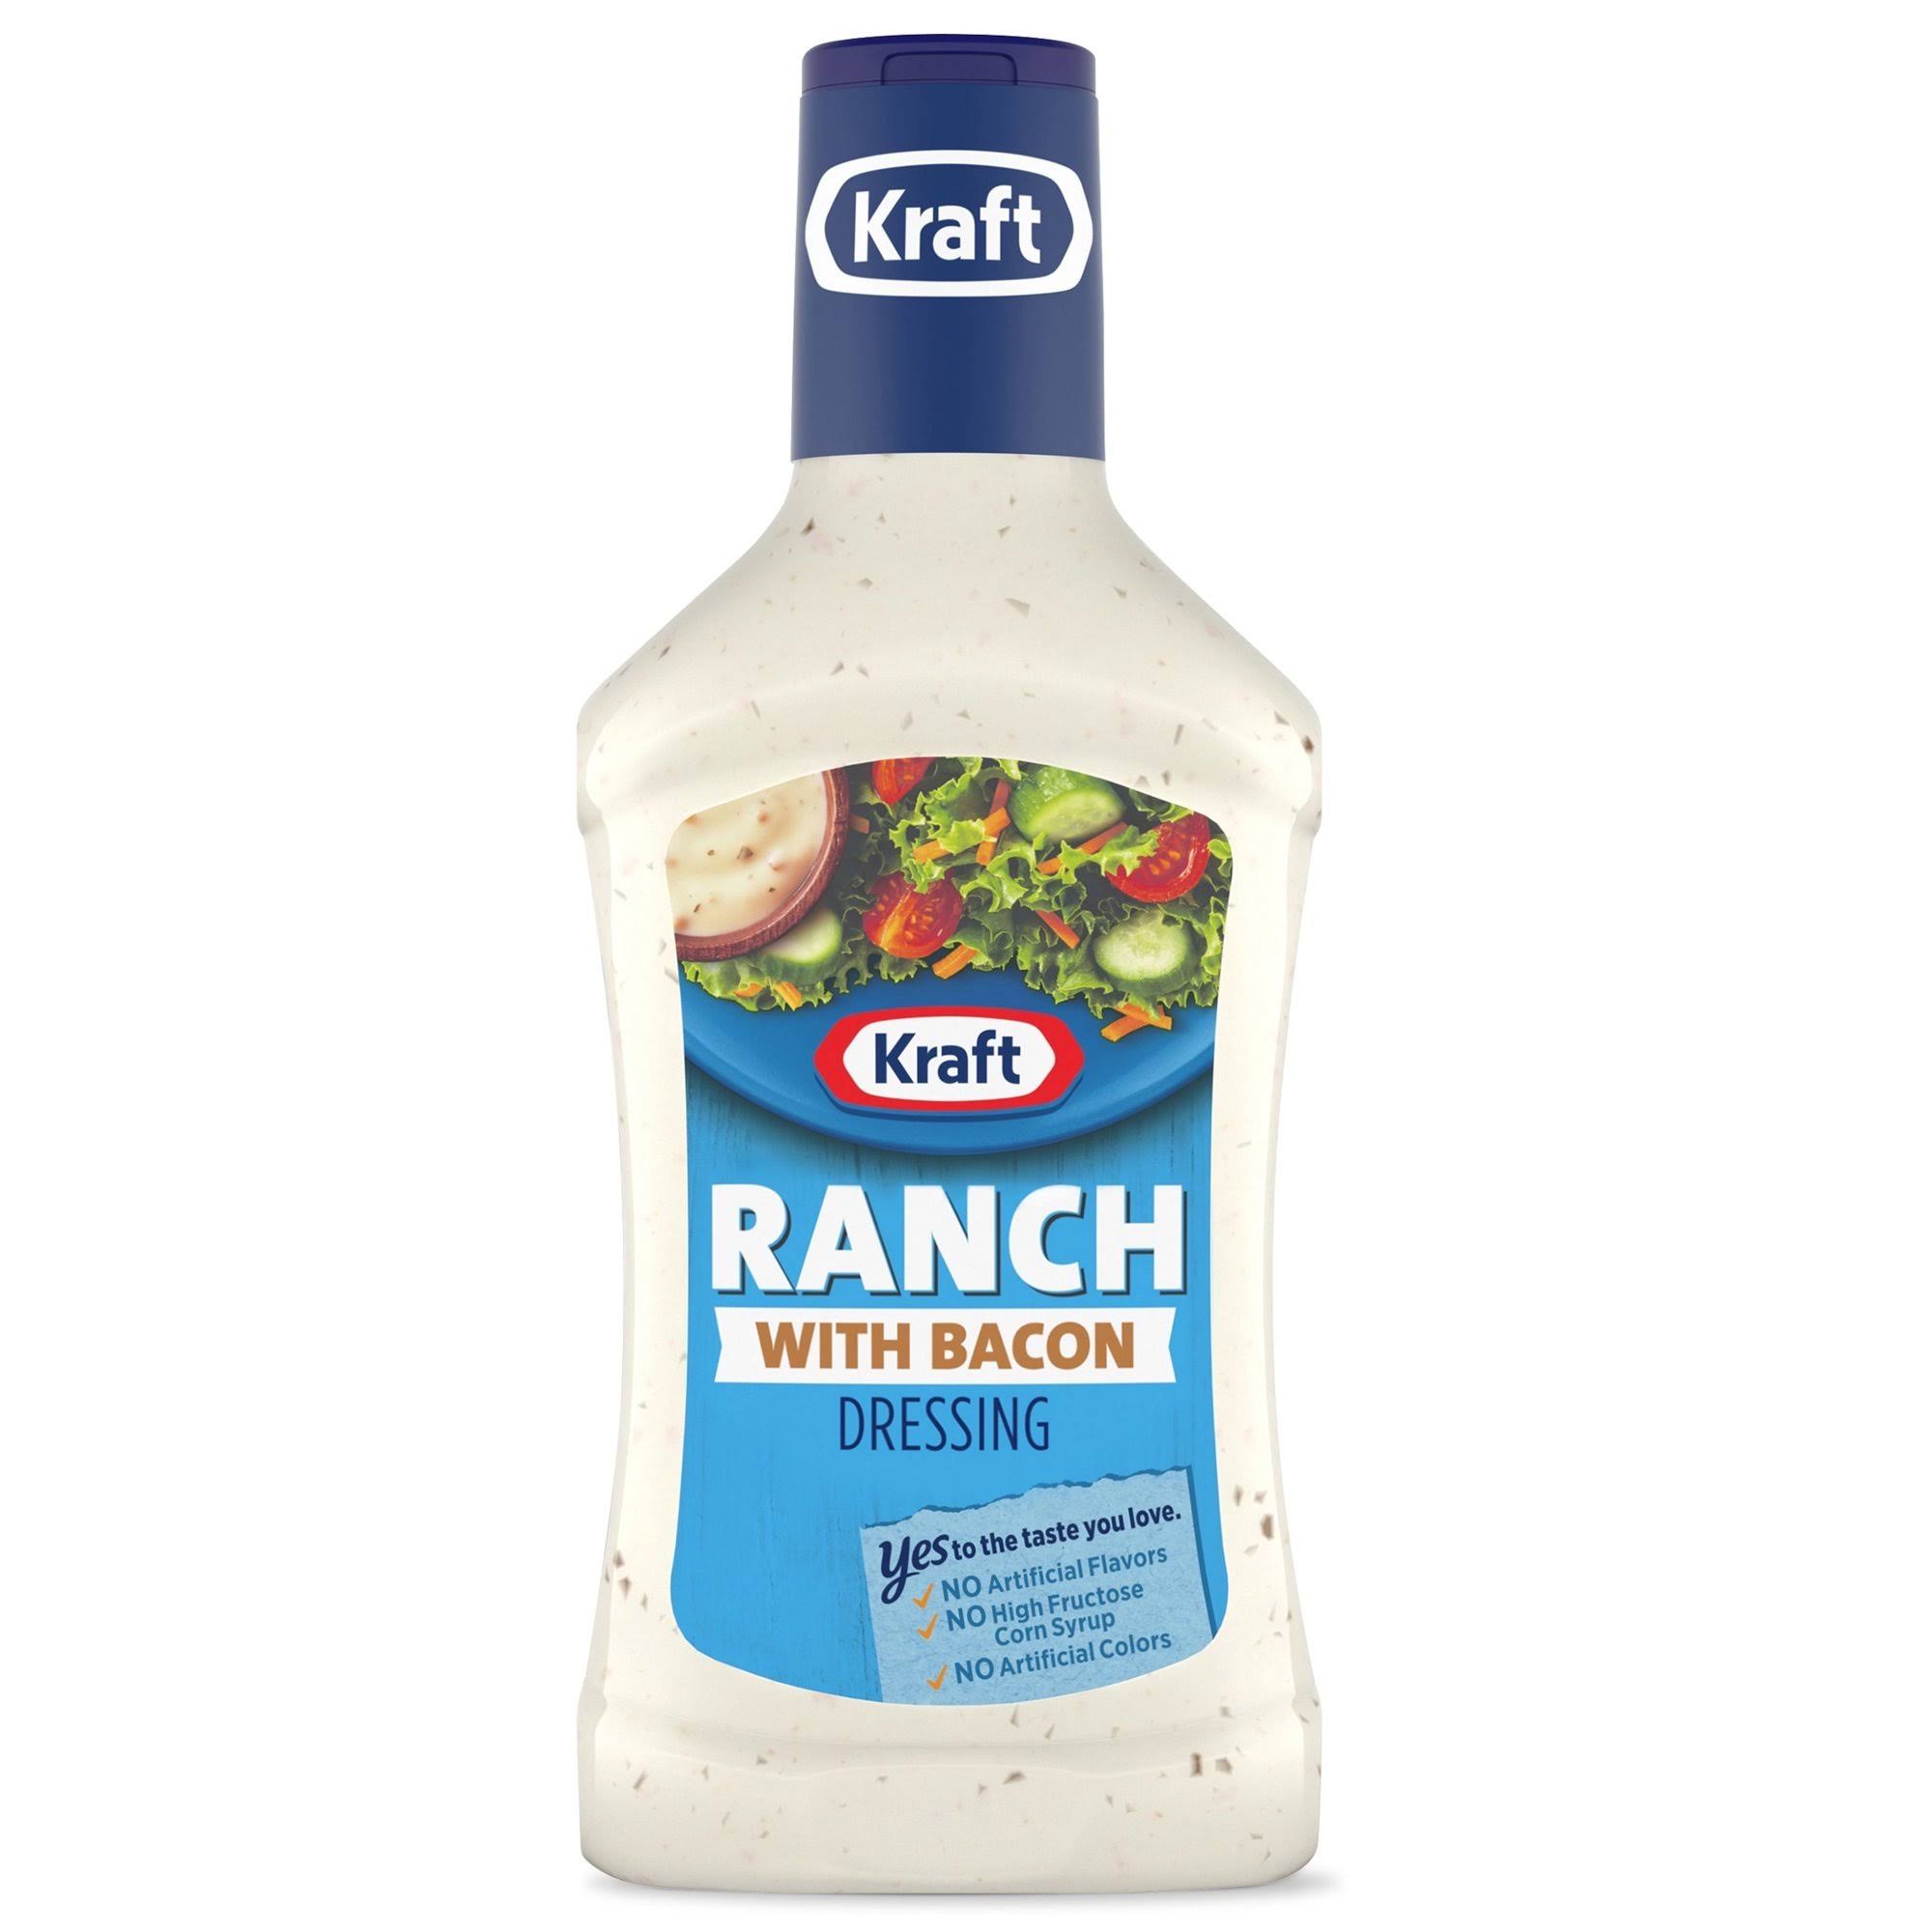 Kraft Ranch Dressing - With Bacon, 16oz